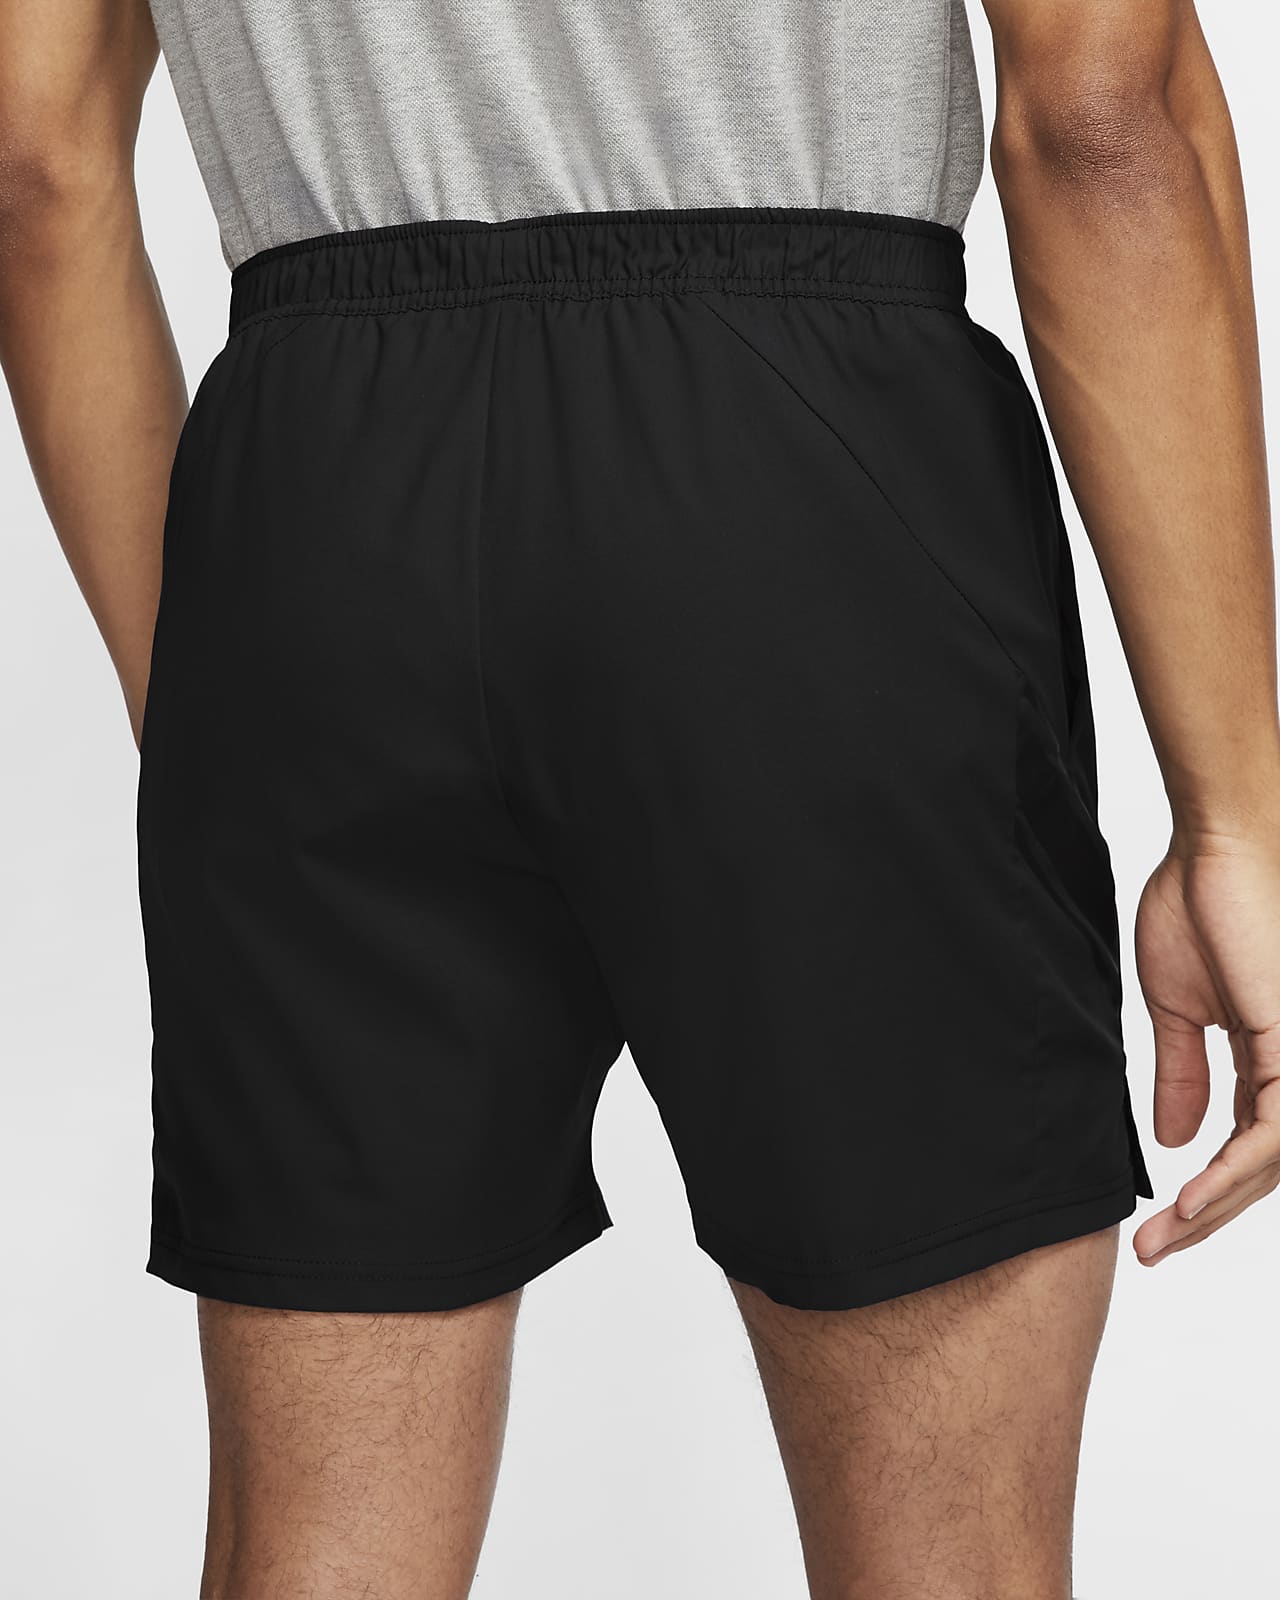 nike men's 7 inch shorts